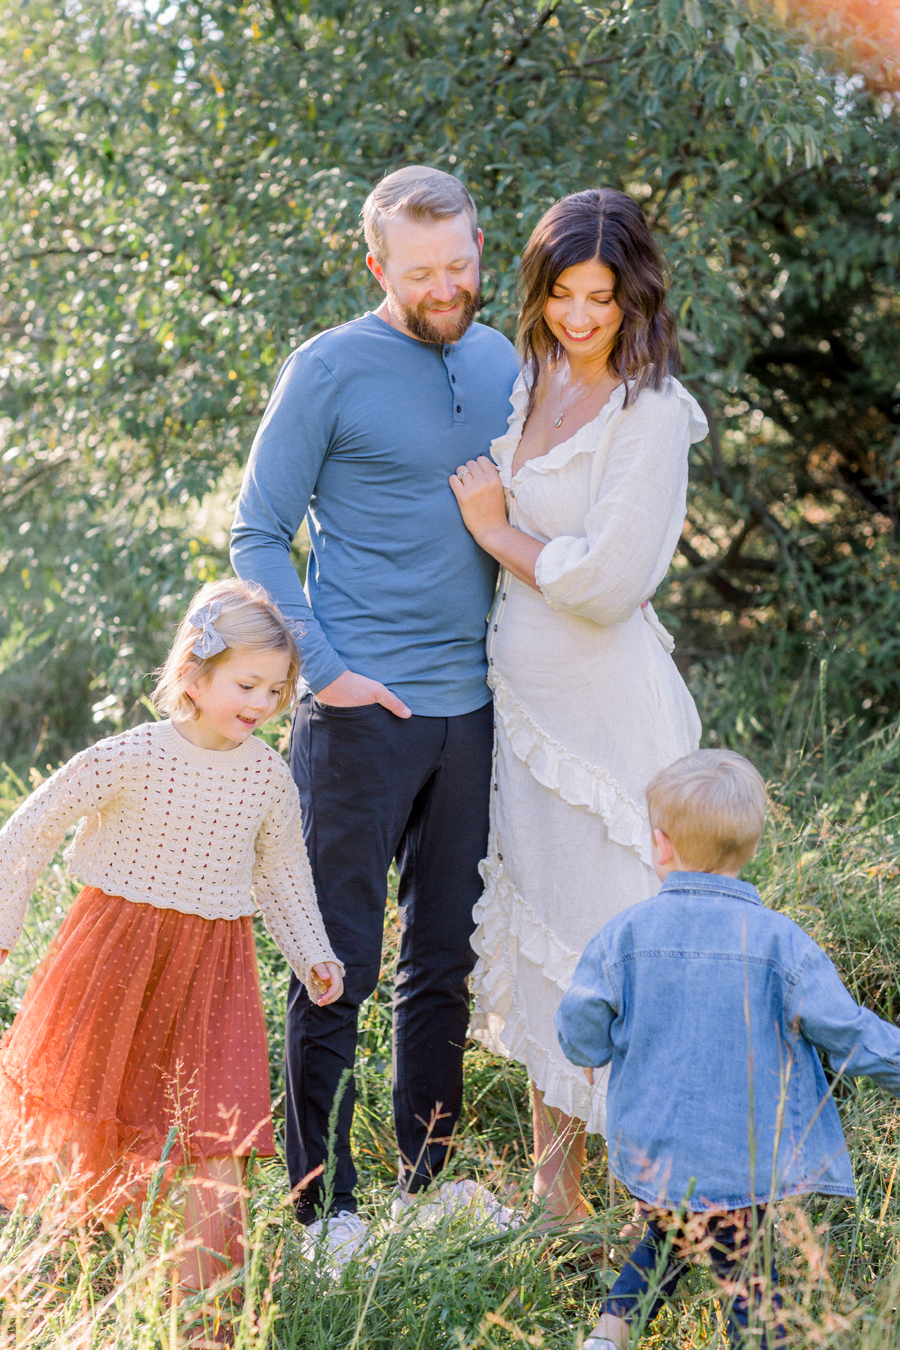 Hallsville Missouri Family Photographer Love Tree Studios captures a beautiful family session.